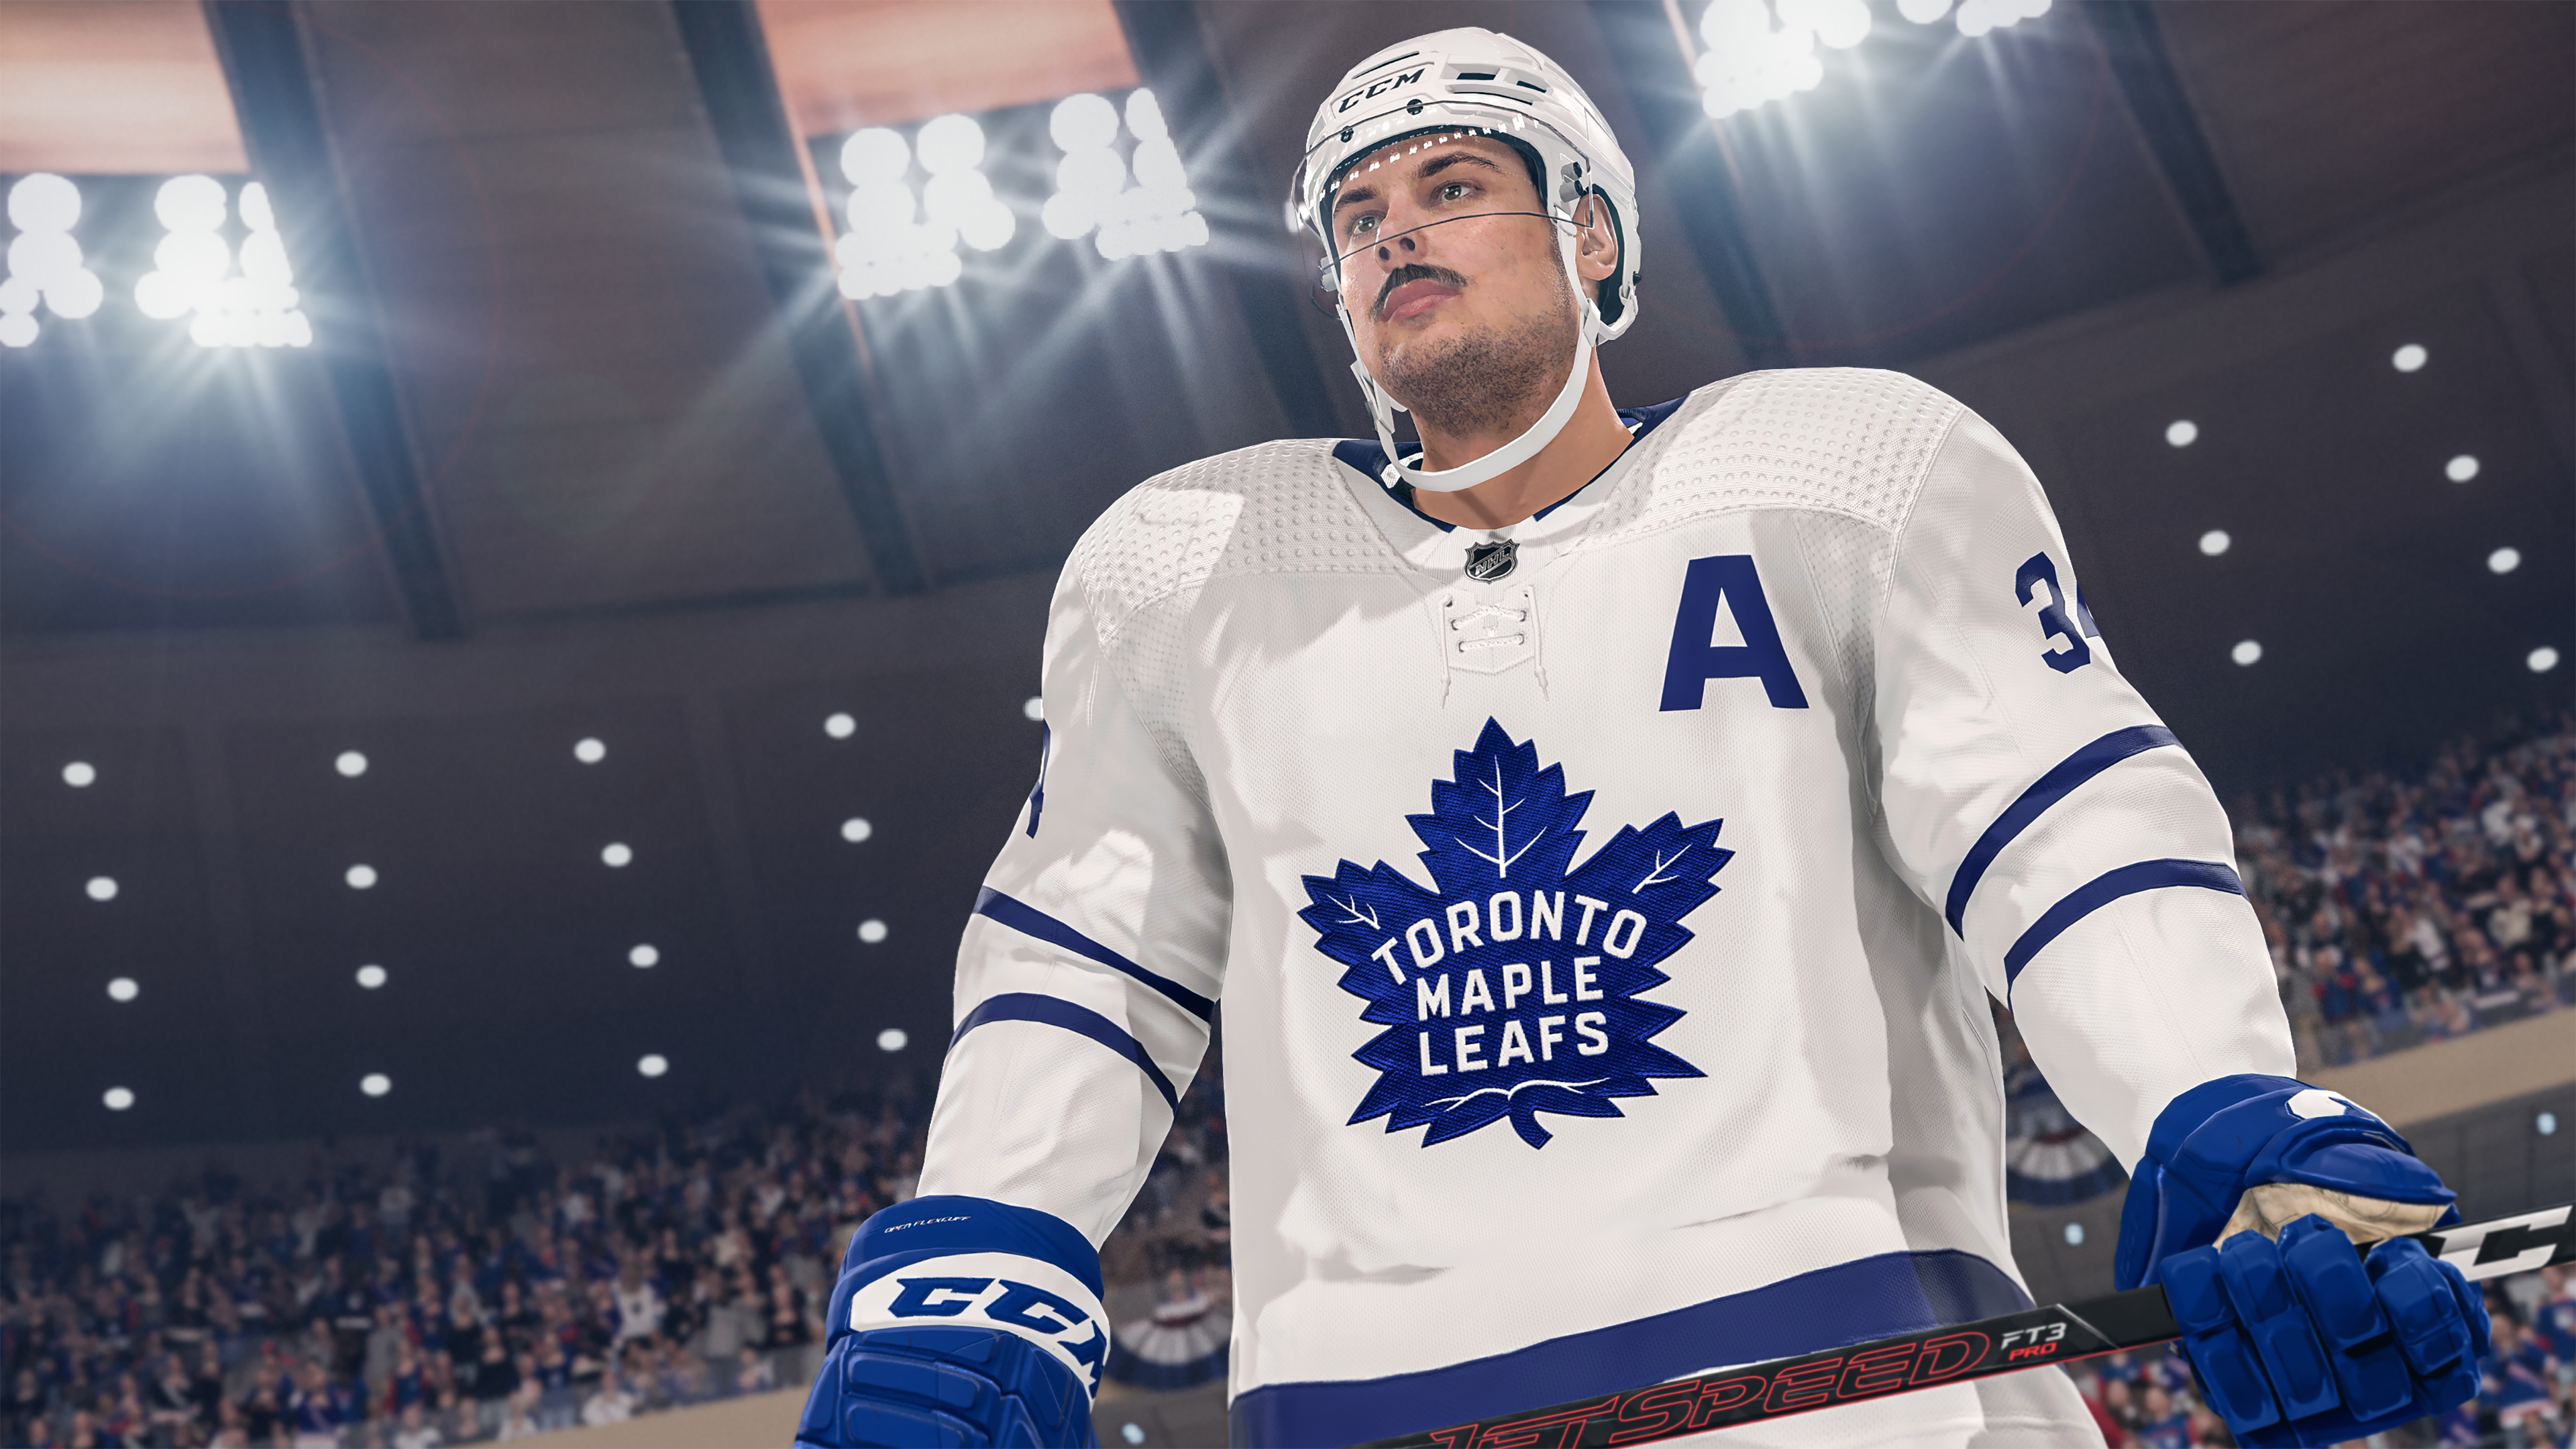 NHL 22 PS4 on PS4 — price history, screenshots, discounts • USA